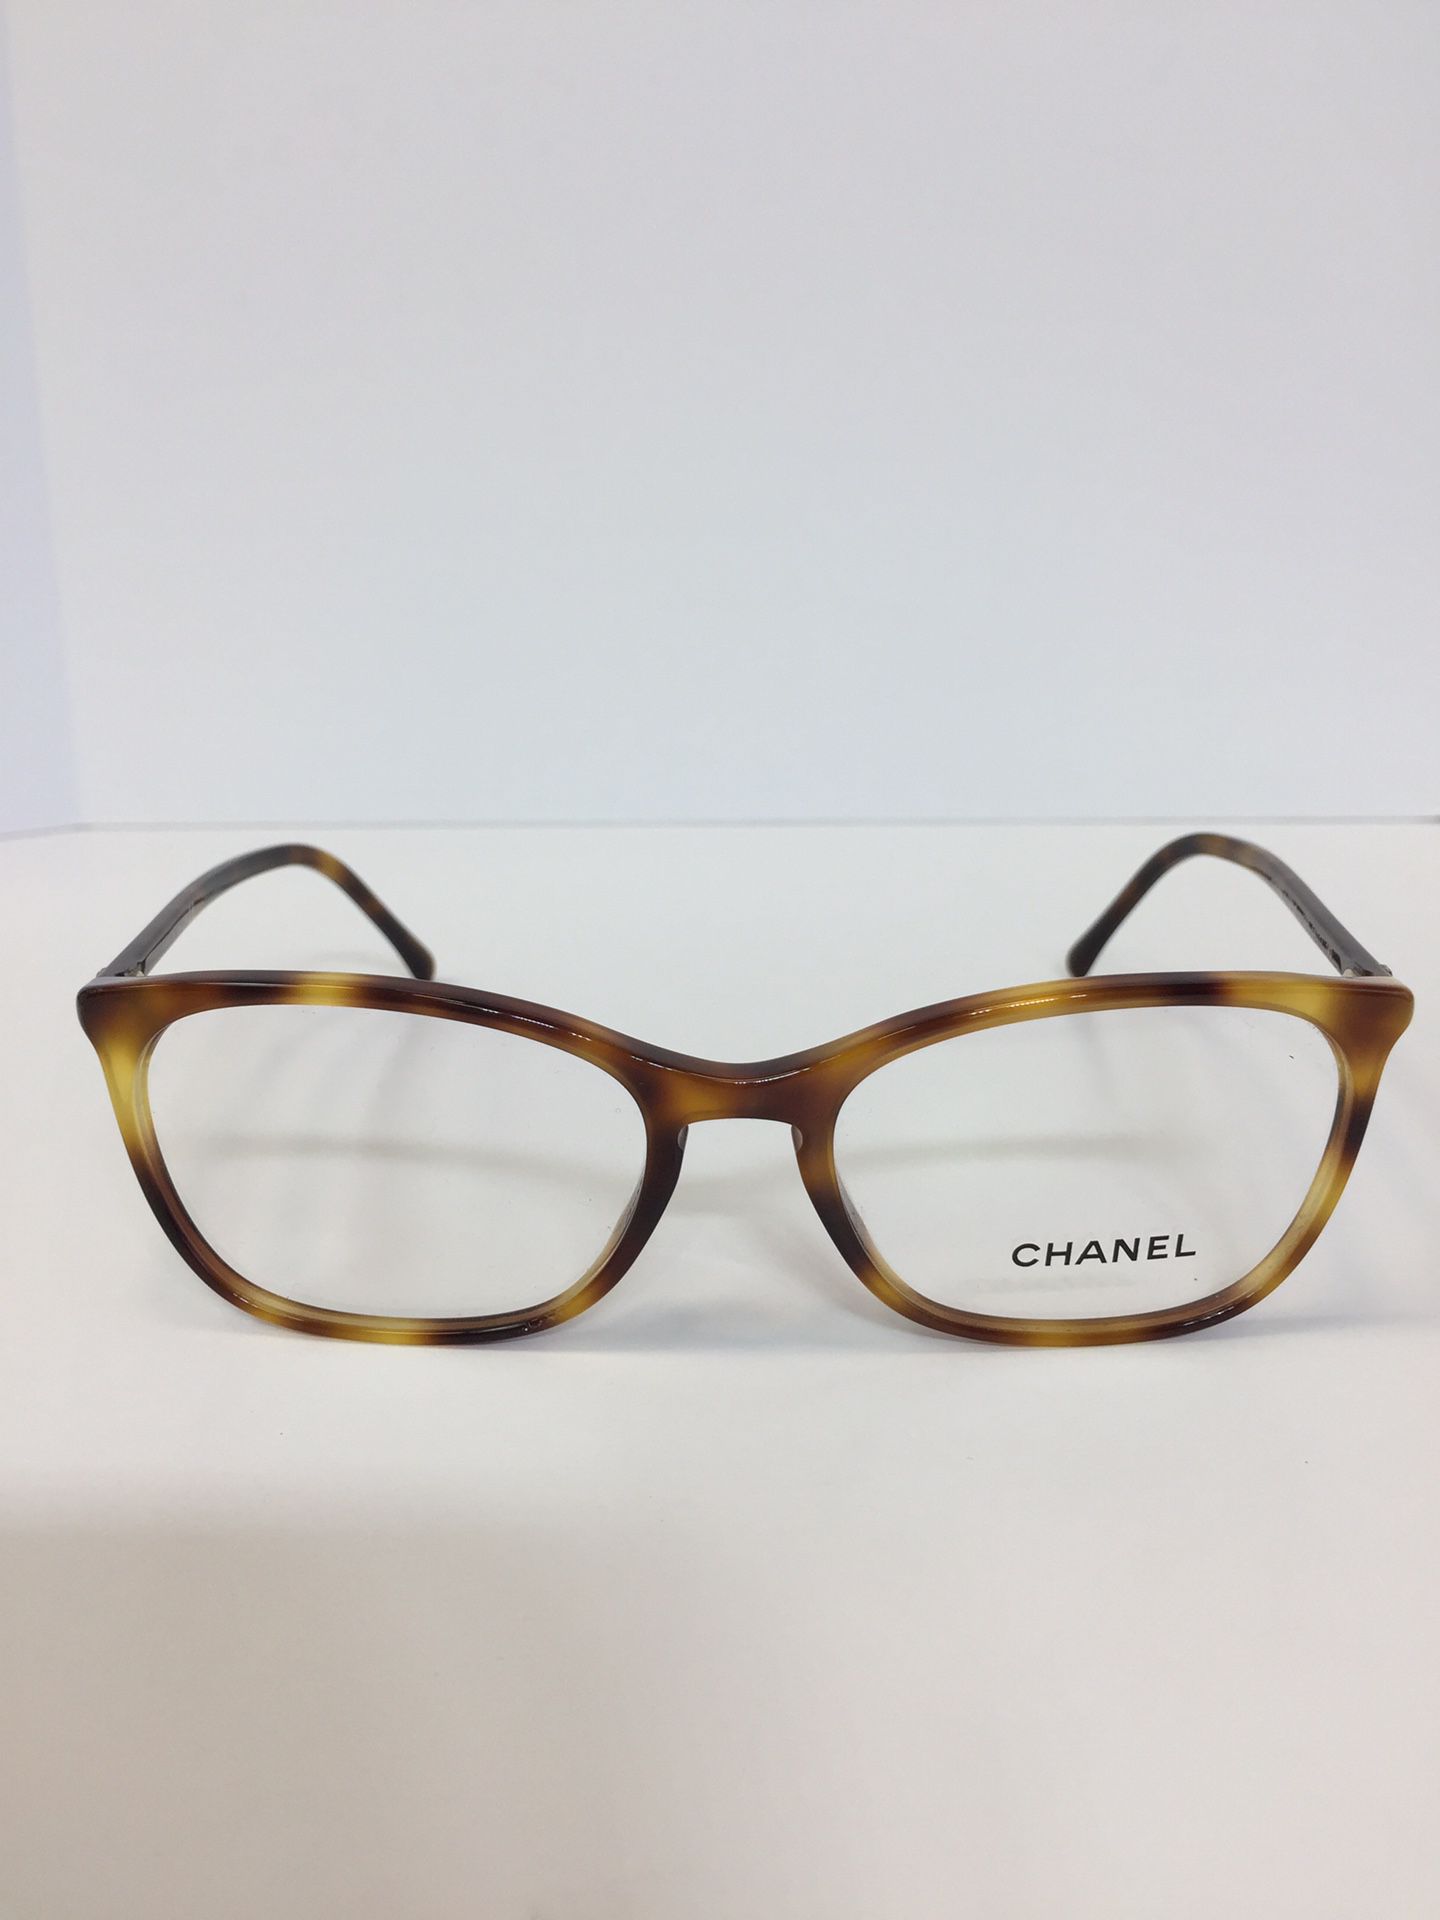 chanel 3281 glasses